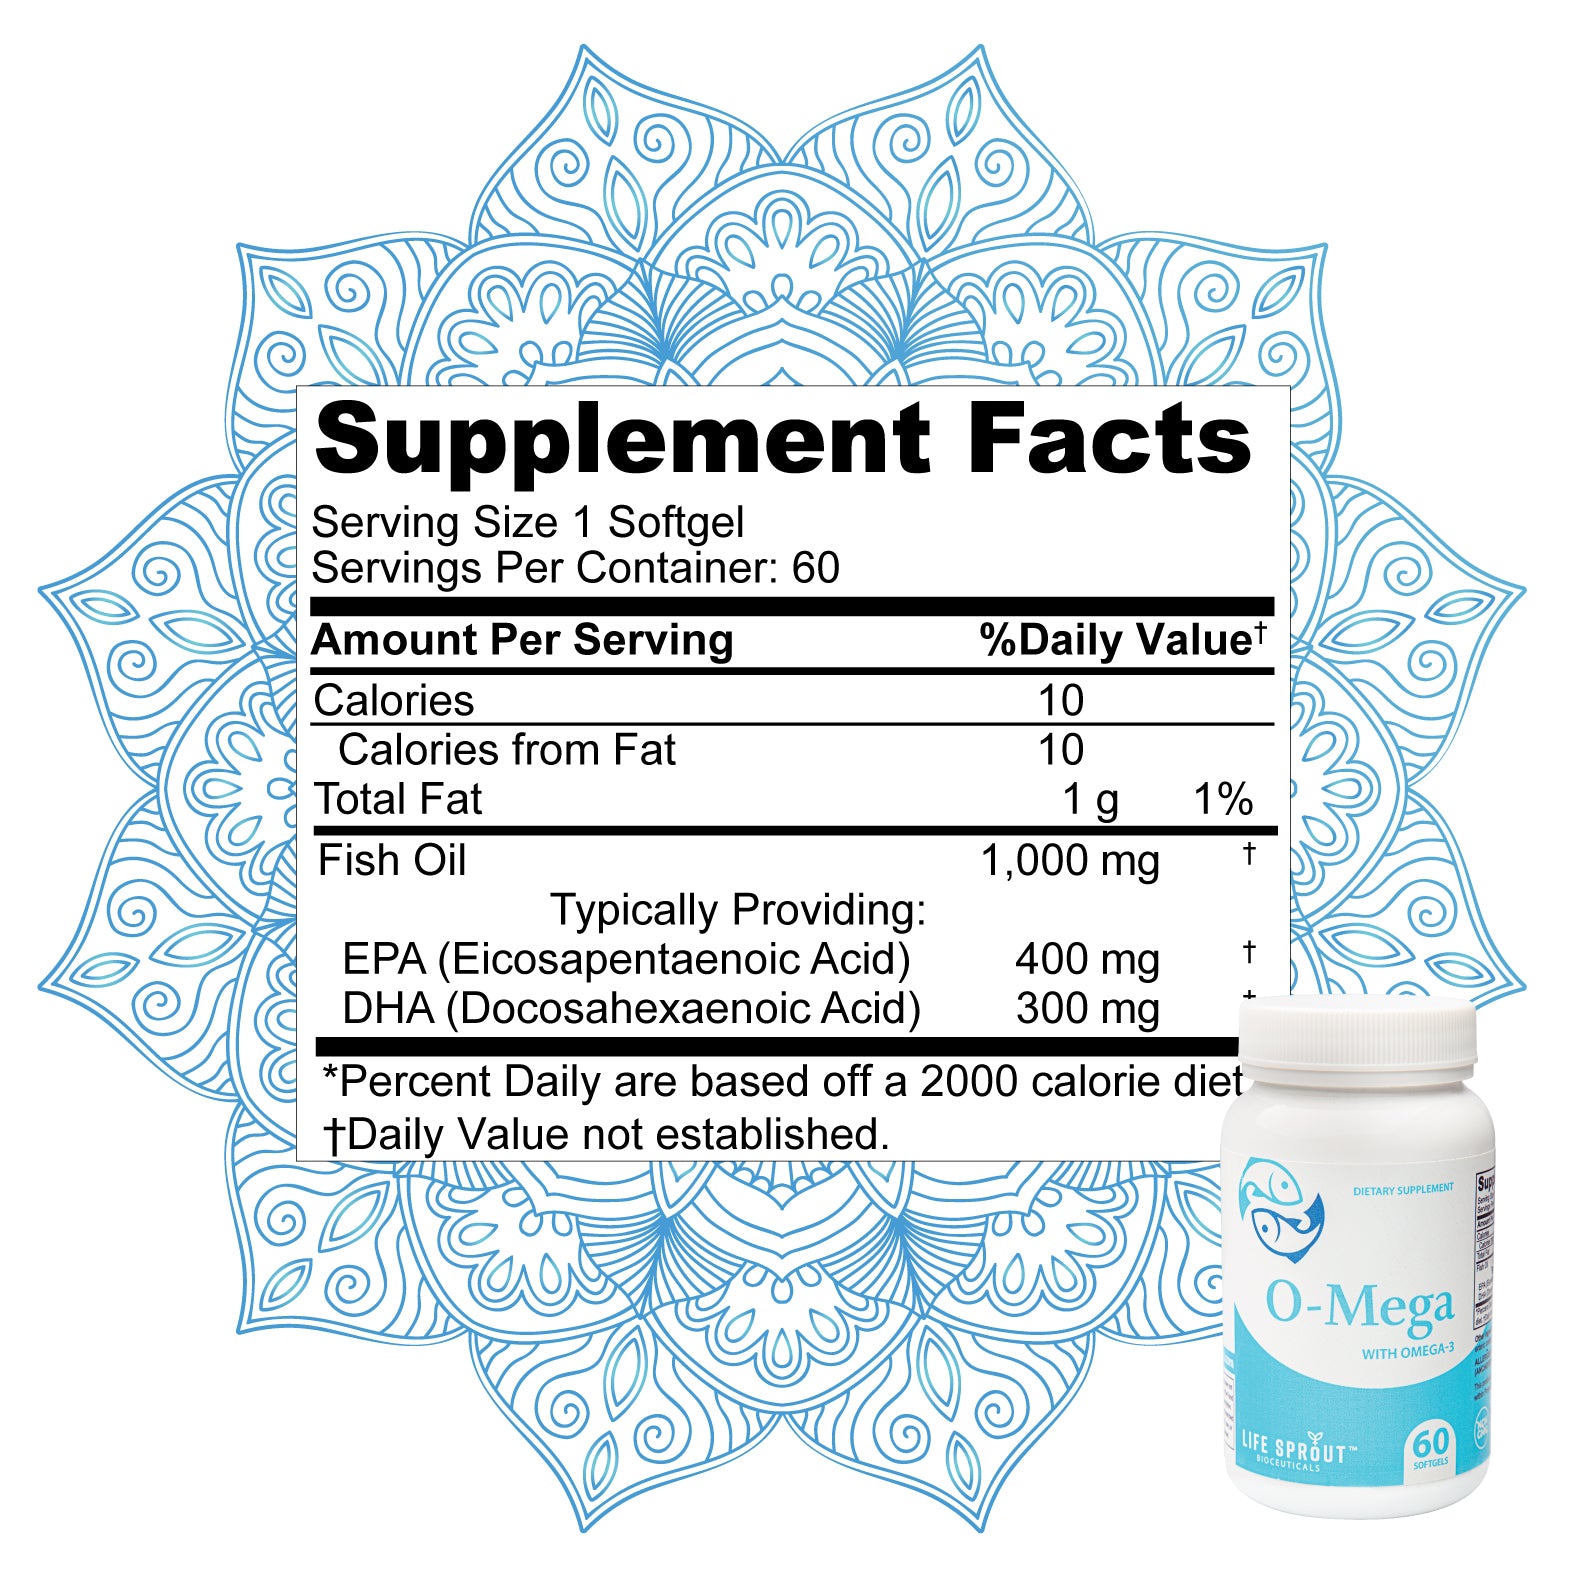 O-Mega - Omega 3 Supplement